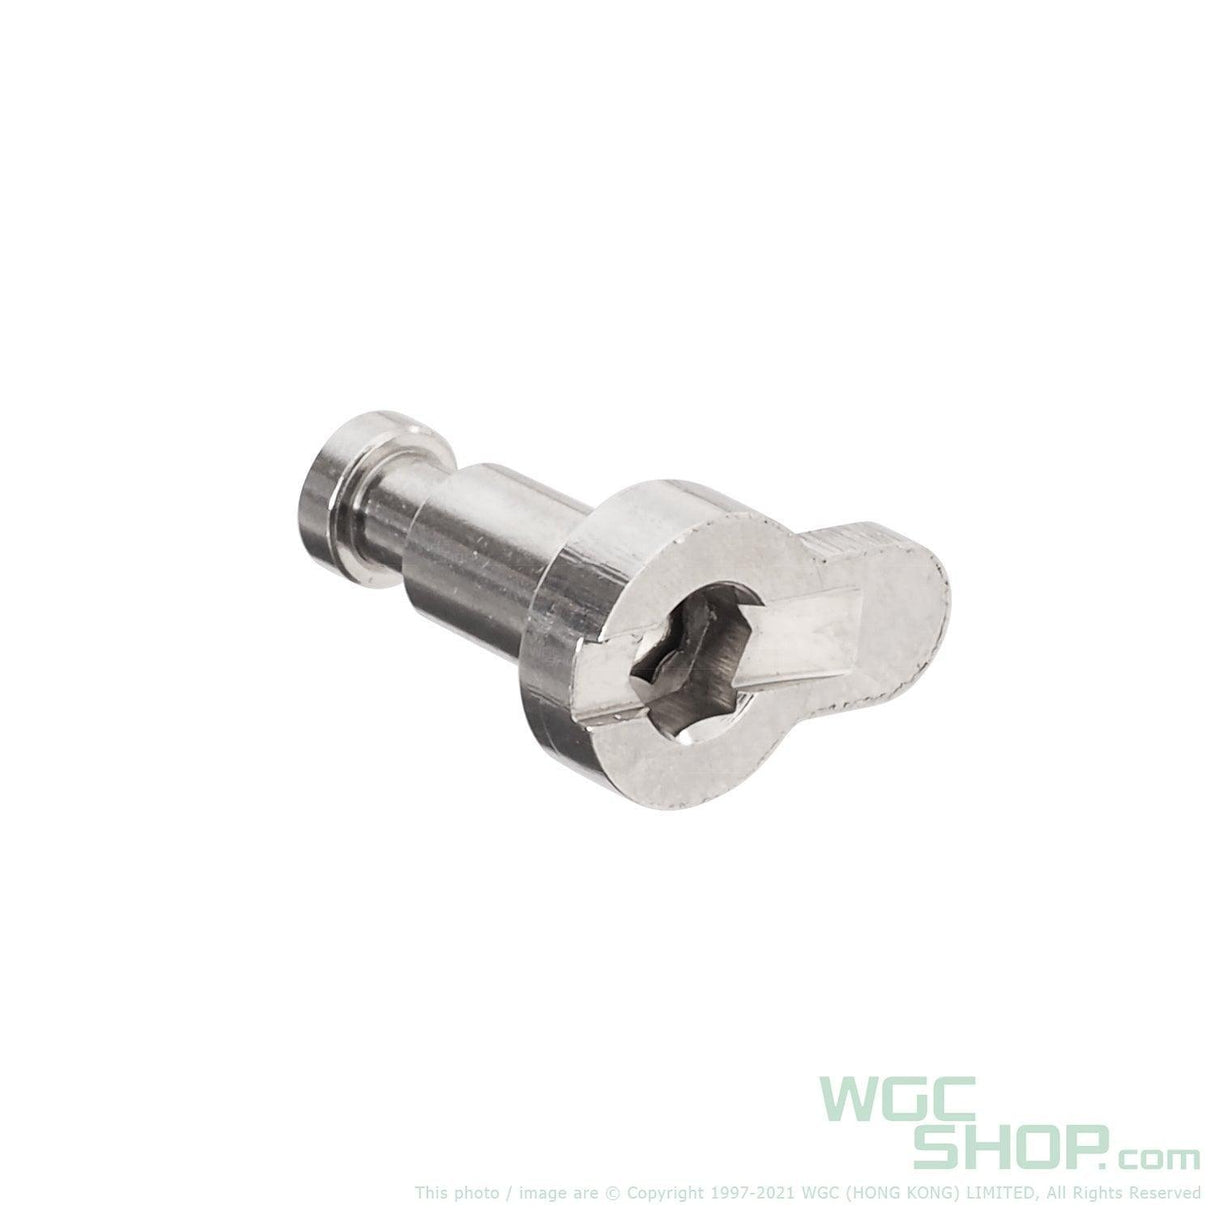 VFC Original Parts - HK417 Gas Block Adjustment Button ( V023GBK030 ) - WGC Shop